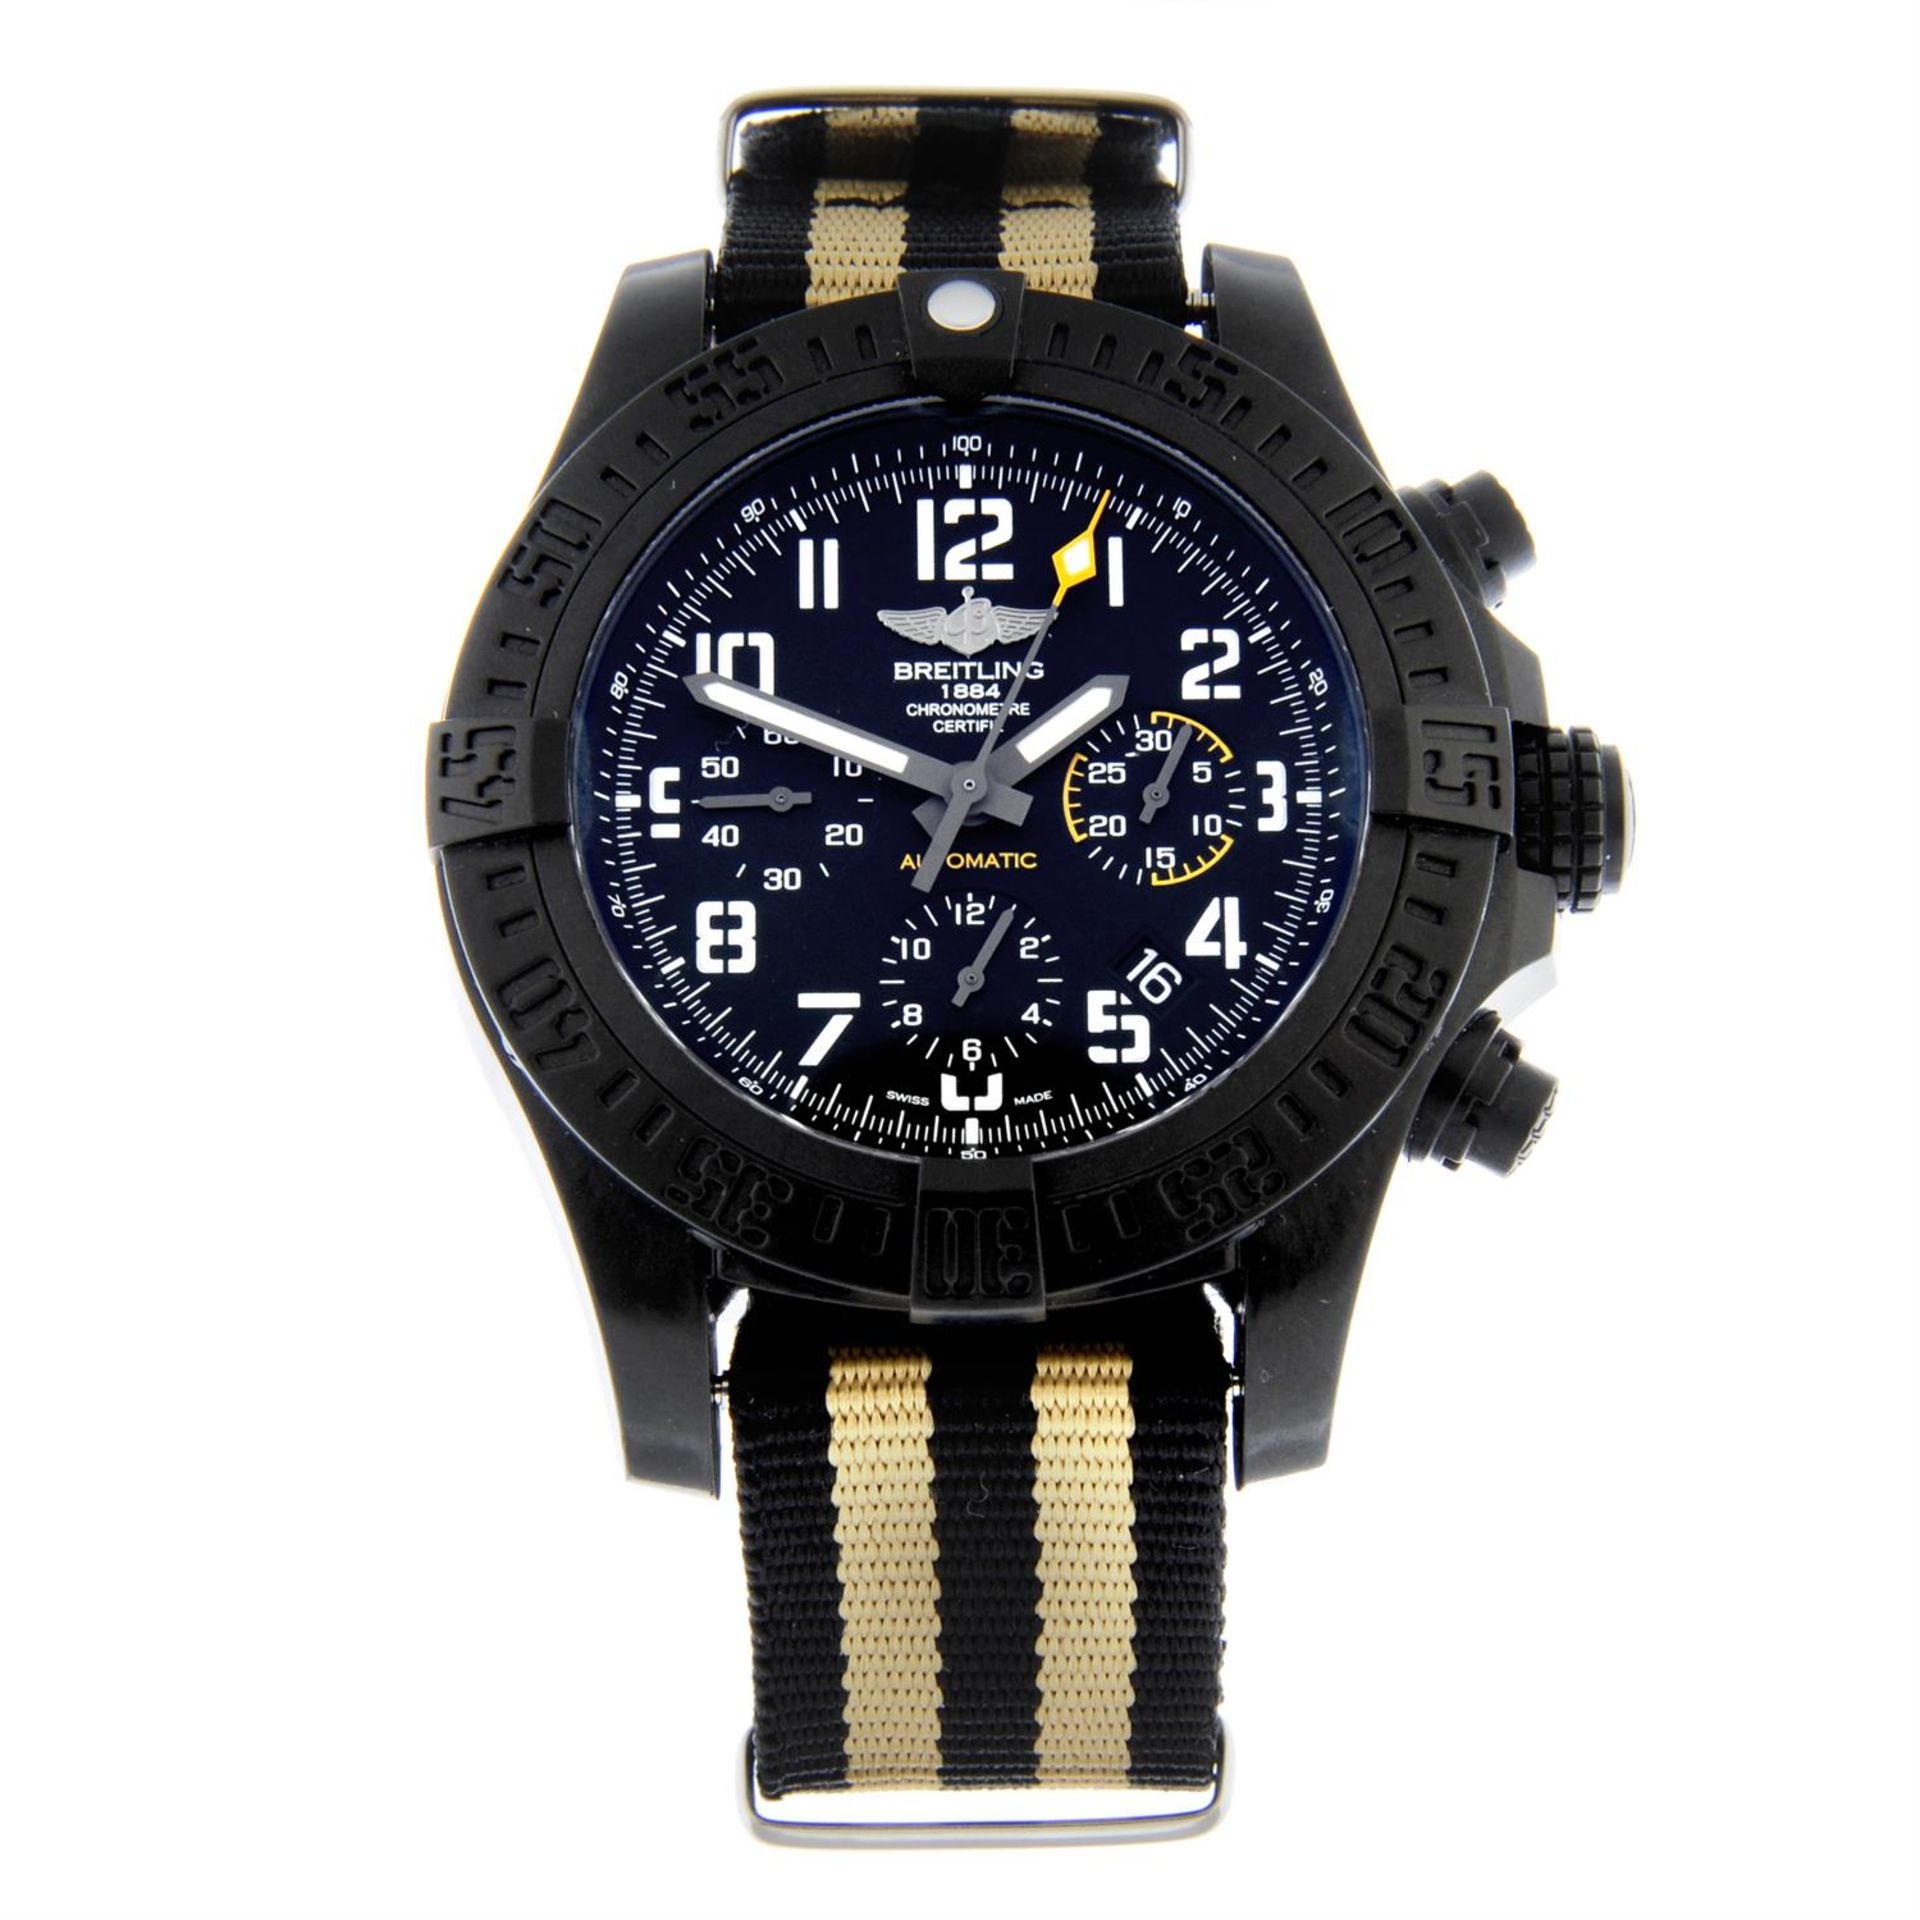 BREITLING - a Breitlight Avenger Hurricane chronograph wrist watch, 45mm.